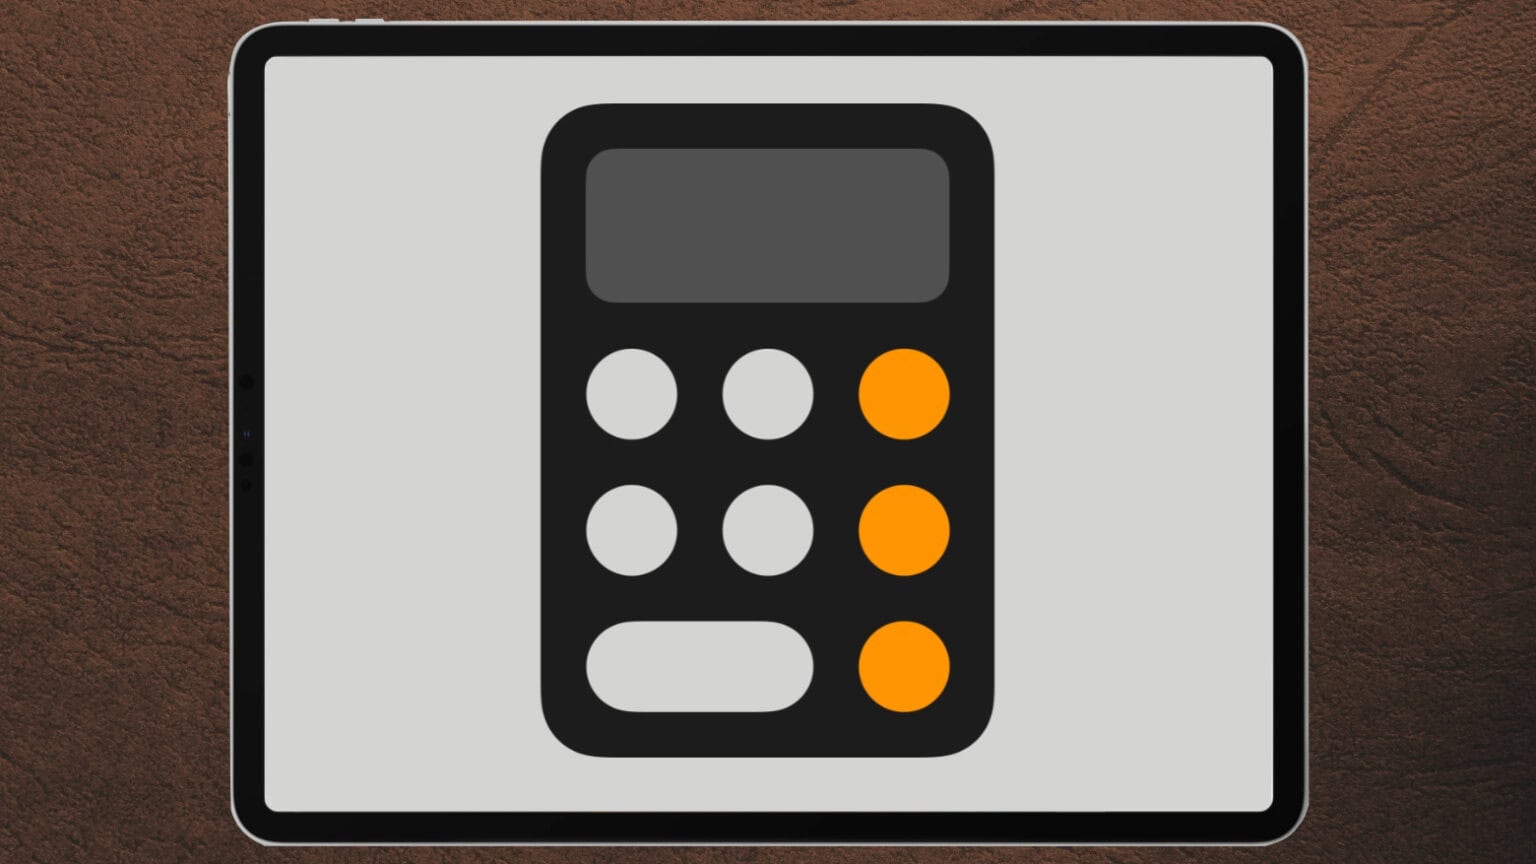 iPad calculator app